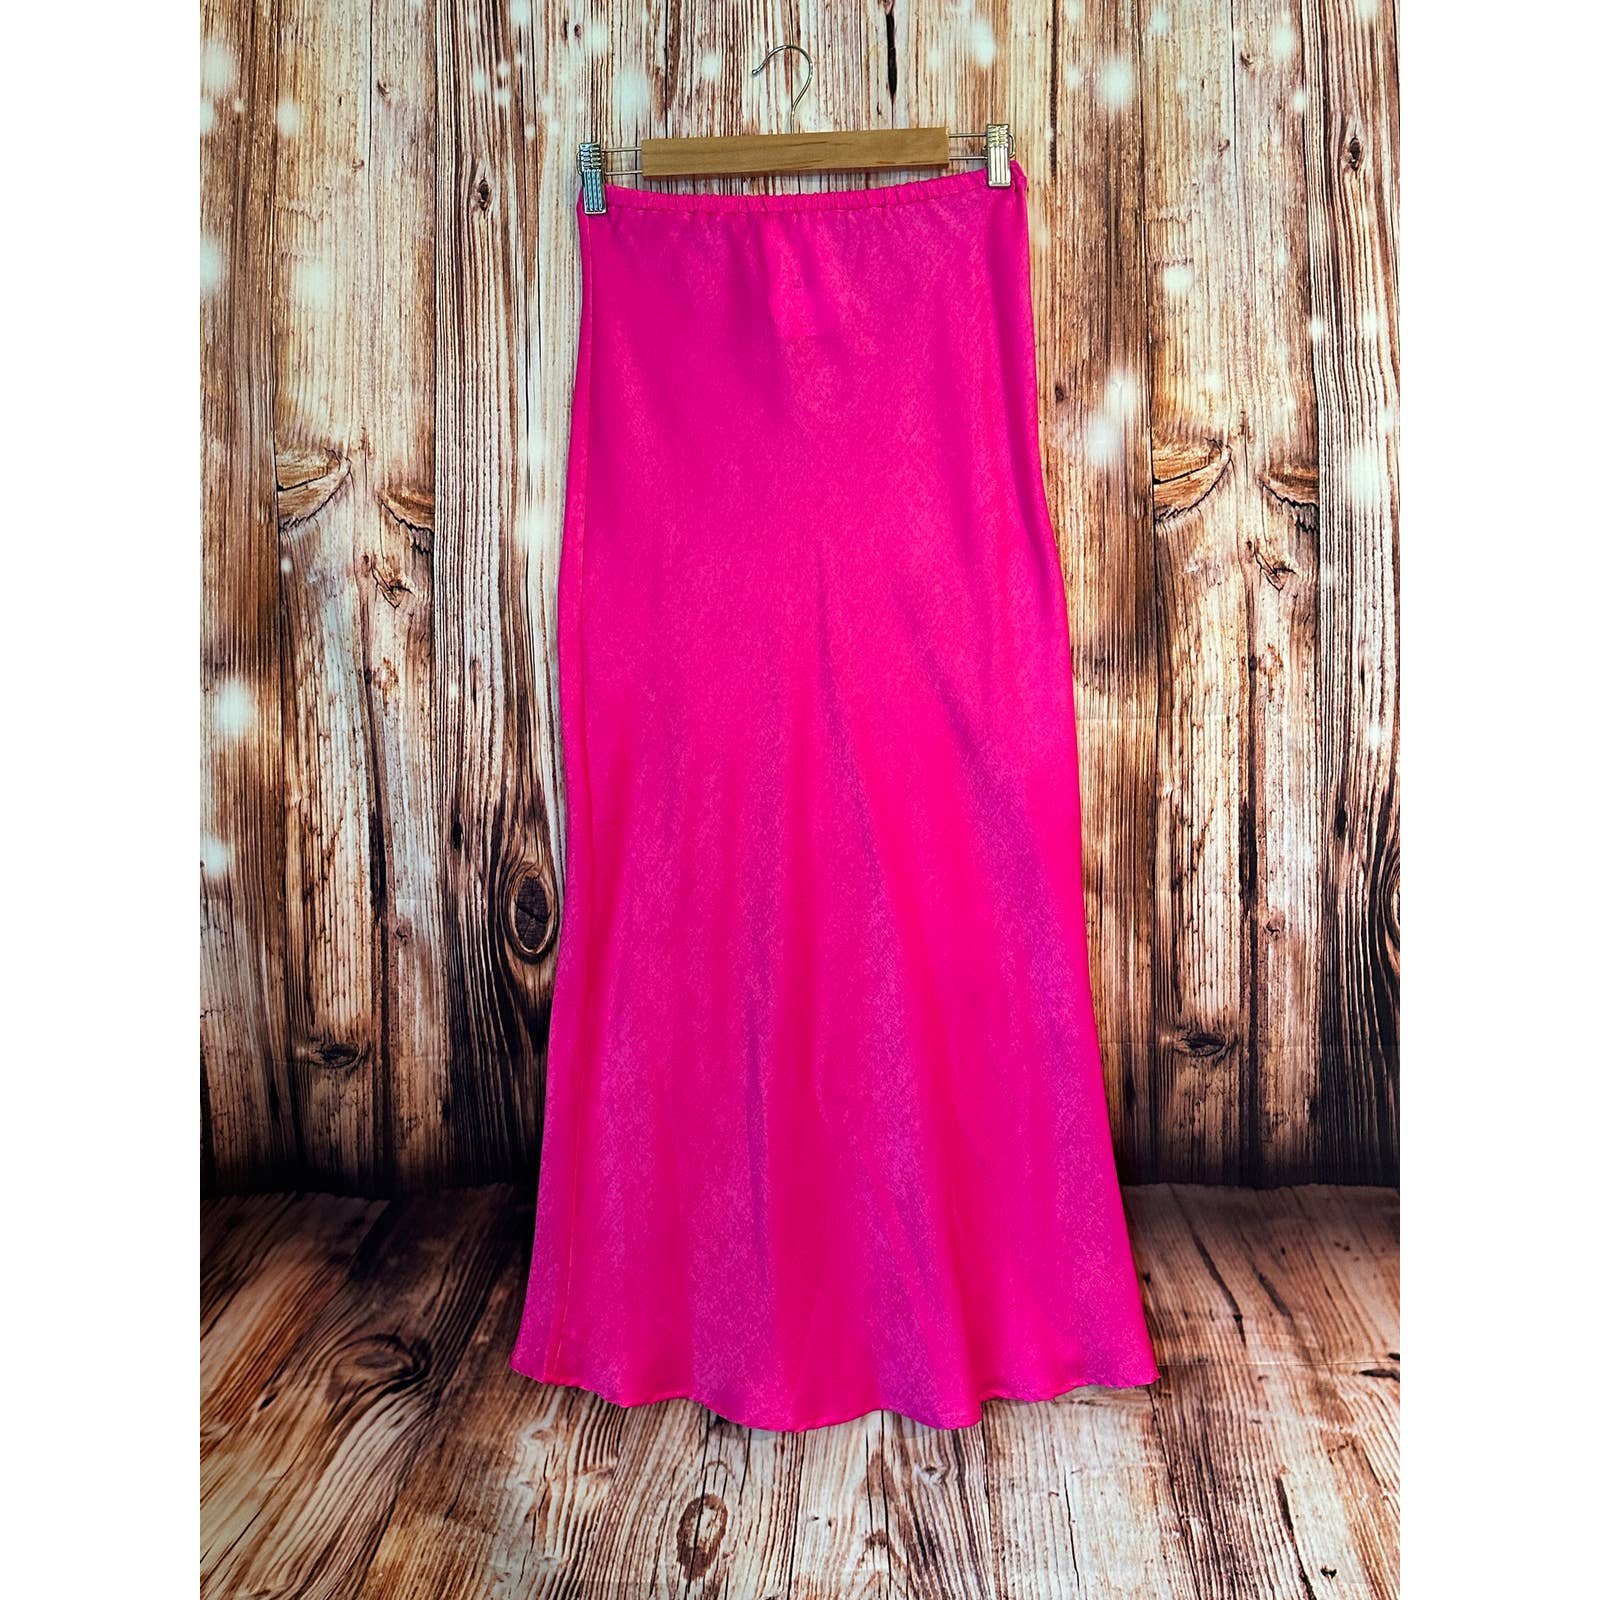 Wholesale price NWT Women´s Boutique Medium Hot Pink Long Leg Baring Slit Skirt GMnAQqhCH Discount